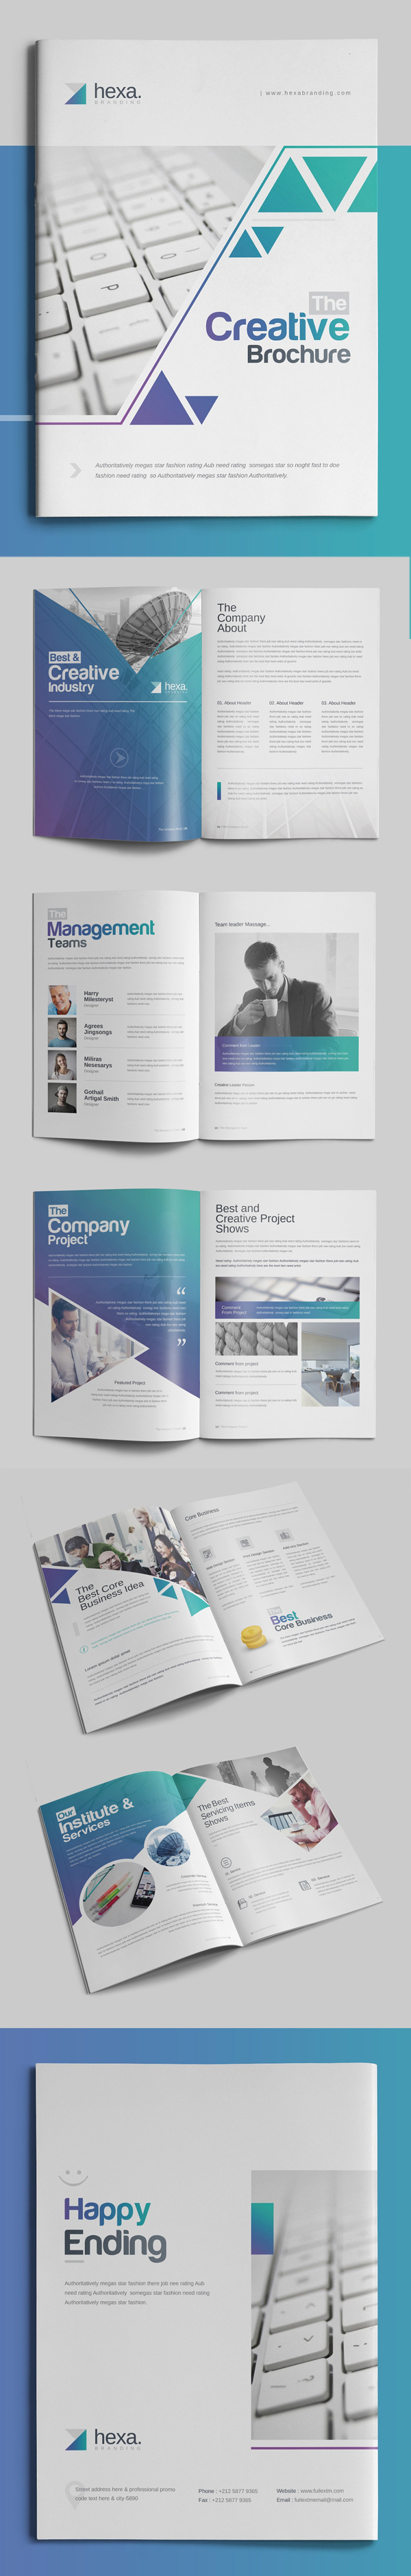 100 Professional Corporate Brochure Templates - 50